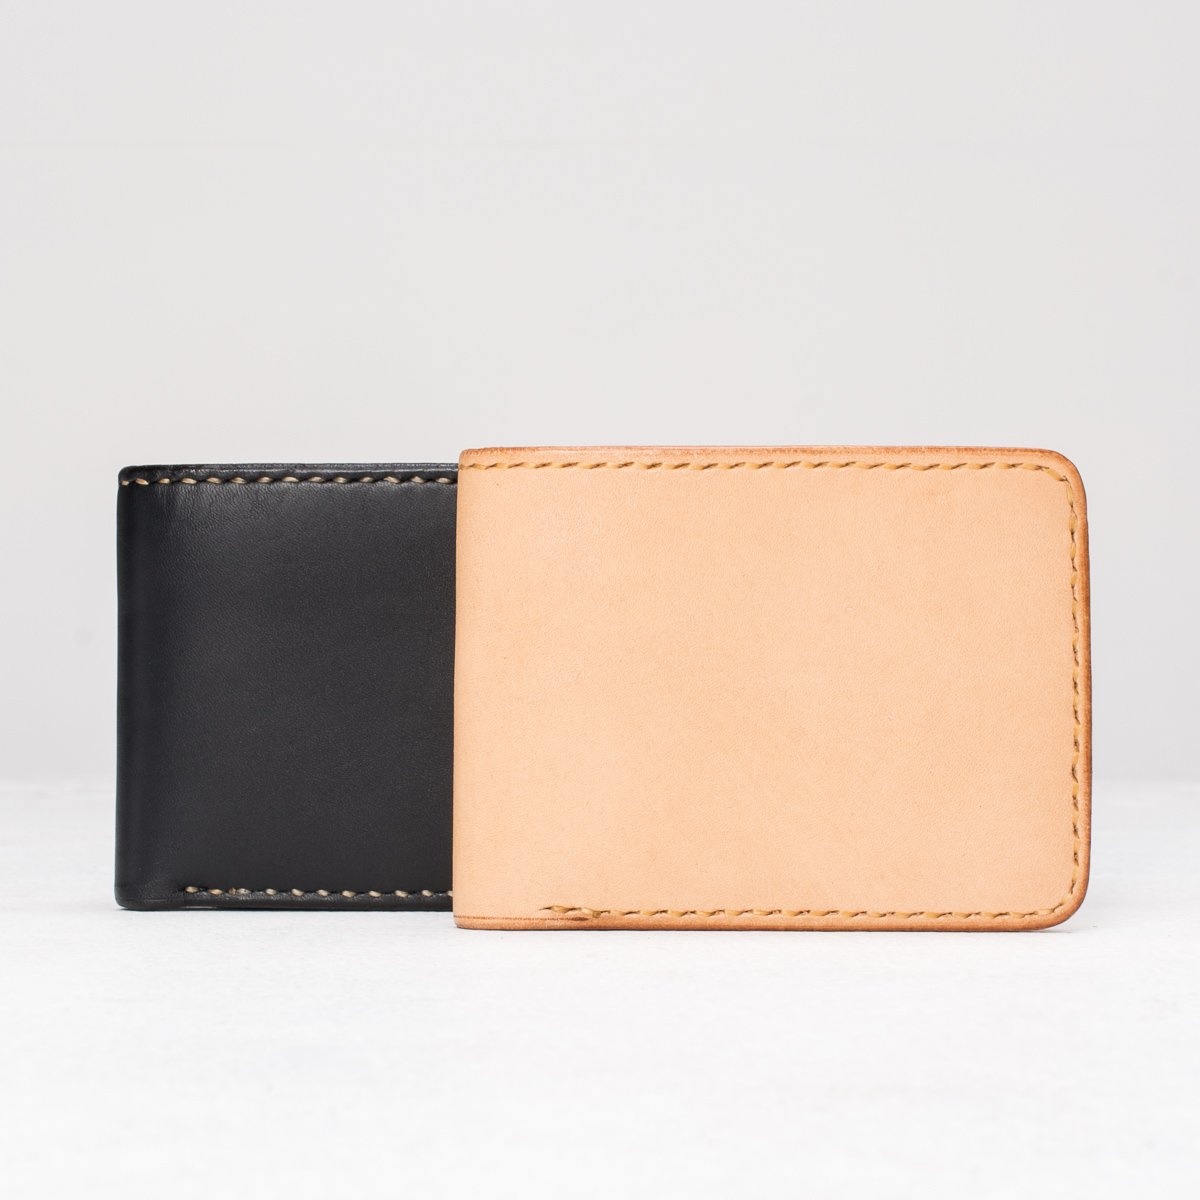 IHG-035 Calf Folding Wallet - Black or Tan - 13